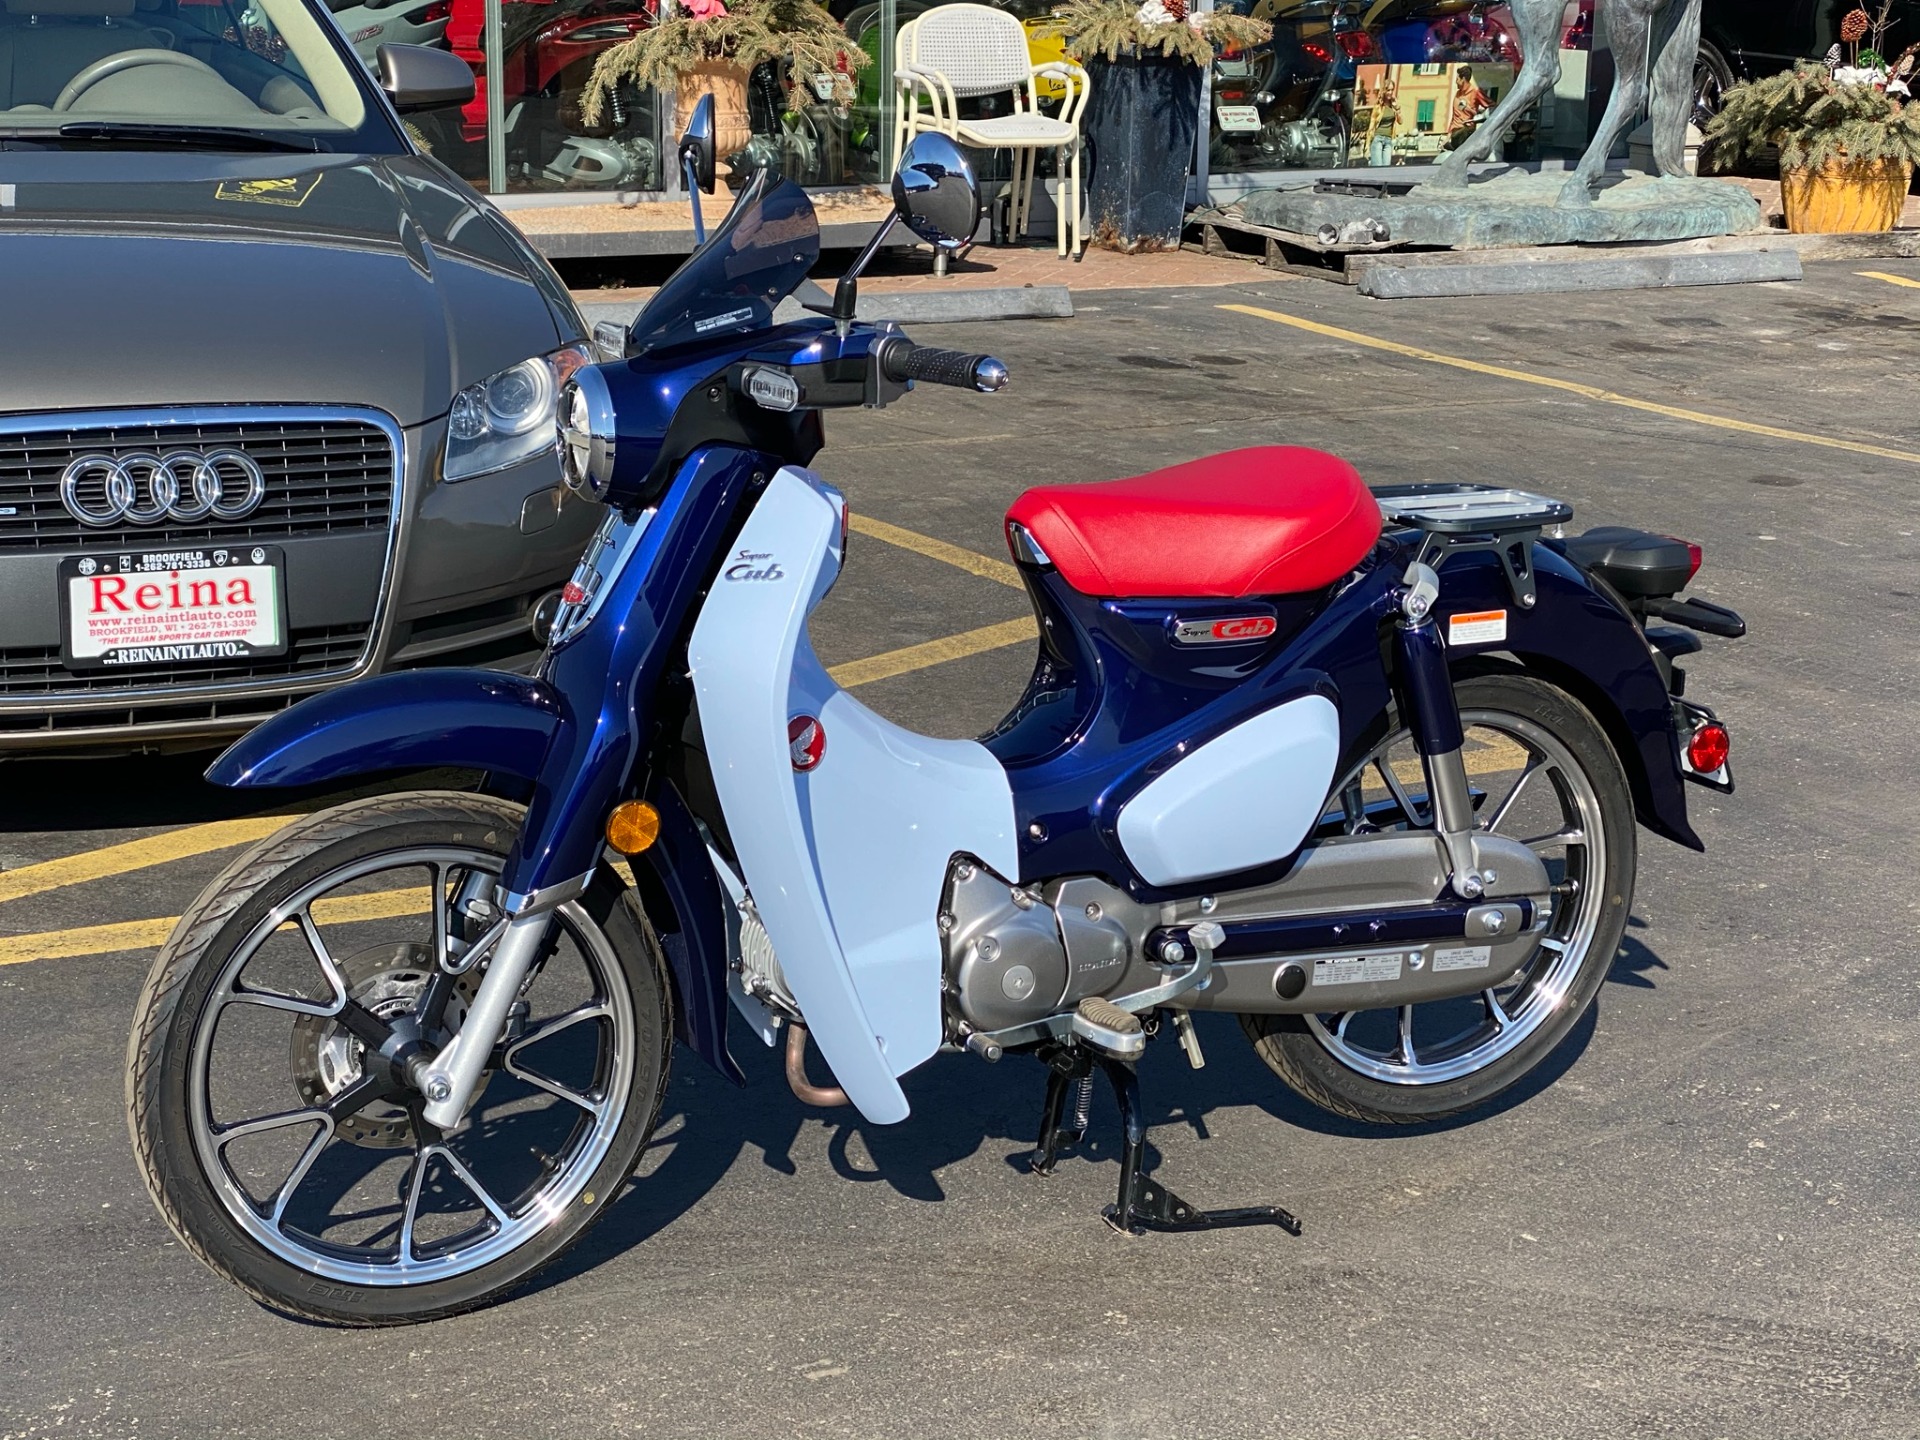 2019 Honda Super Cub 125 Stock # 0526 for sale near Brookfield, WI | WI ...